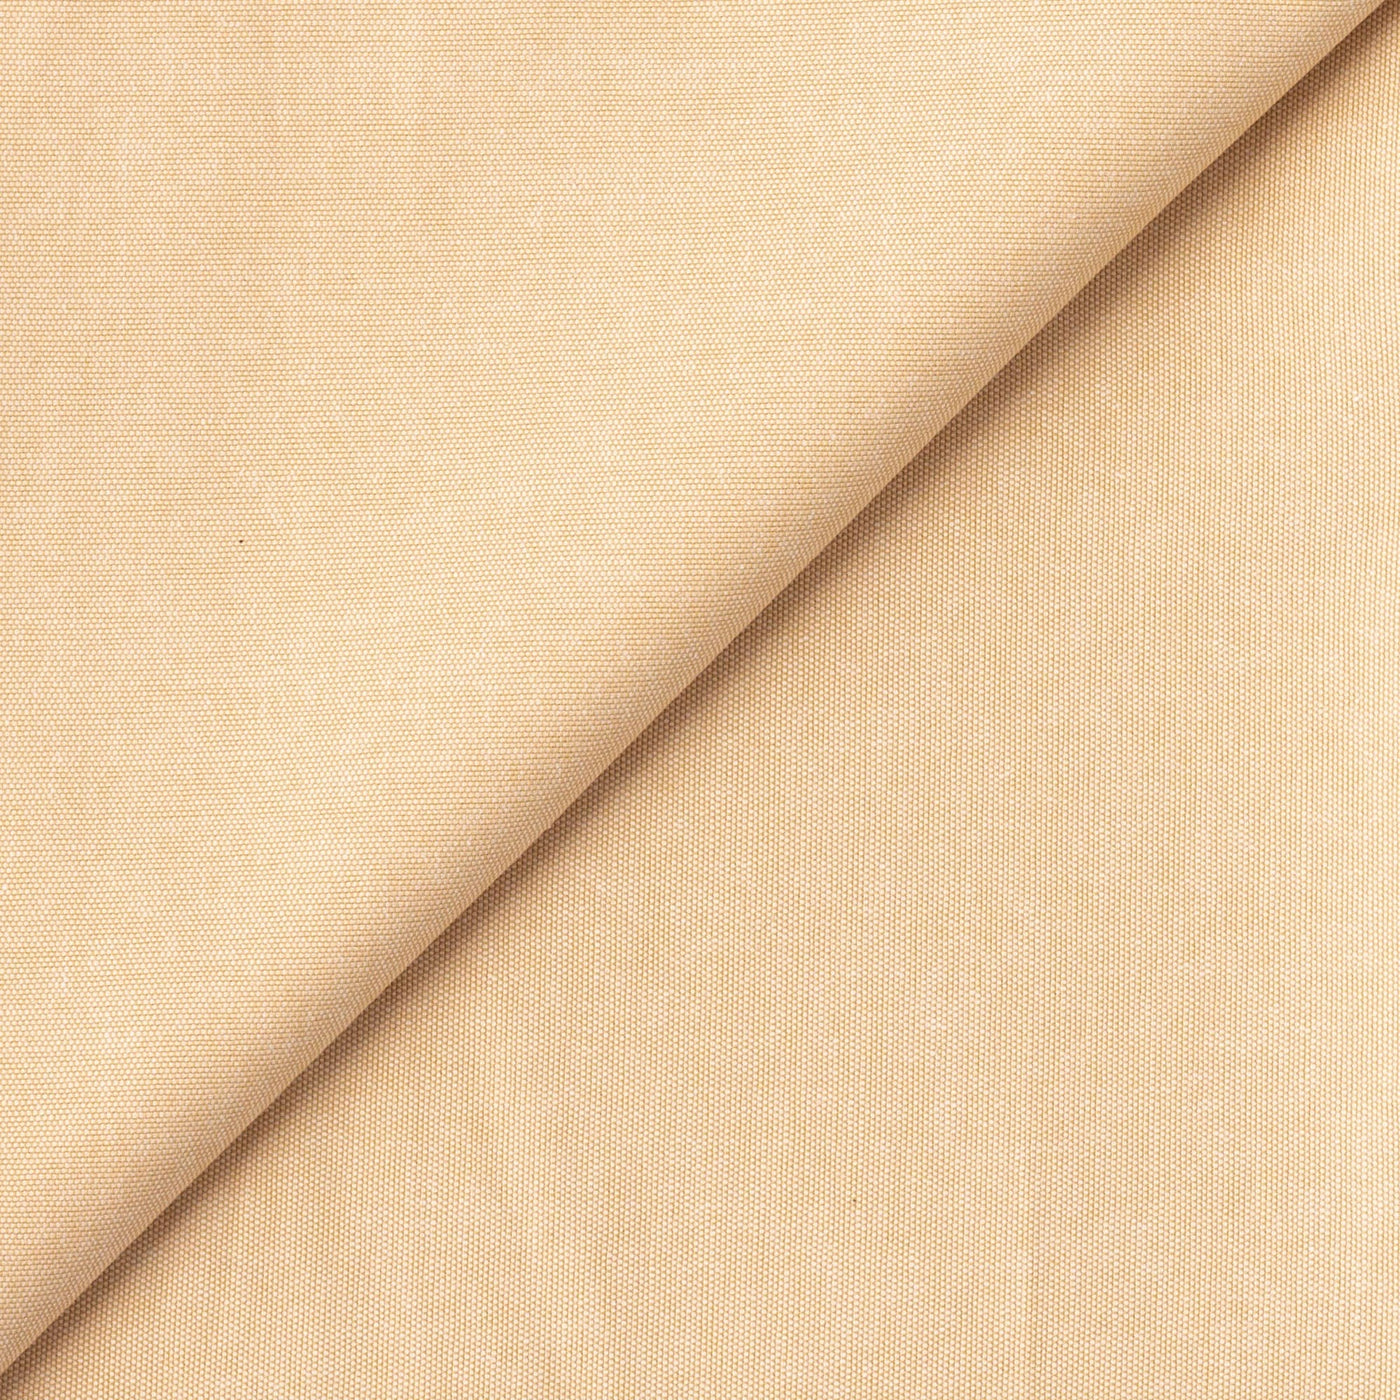 Fabric Pandit Cut Piece 1.25M (CUT PIECE) Pale Yellow Oxford Cotton Men's Shirt Fabric (Width 58 inch)